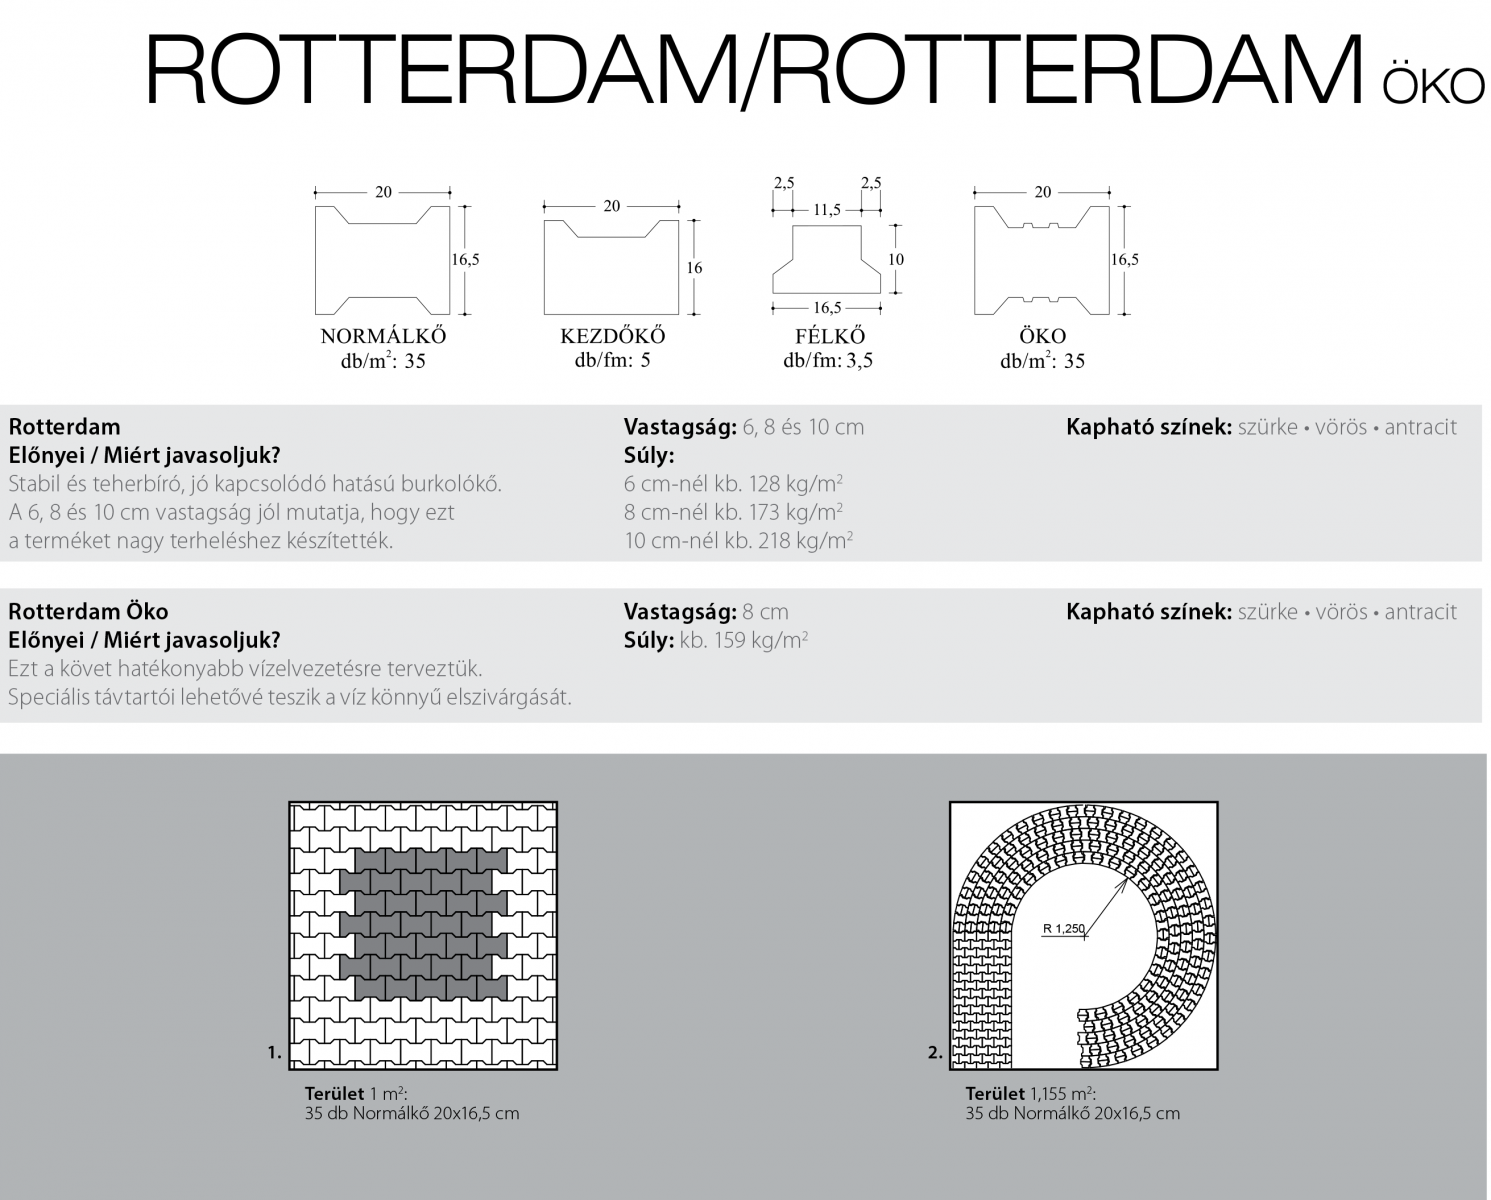 Rotterdam öko technikai információi